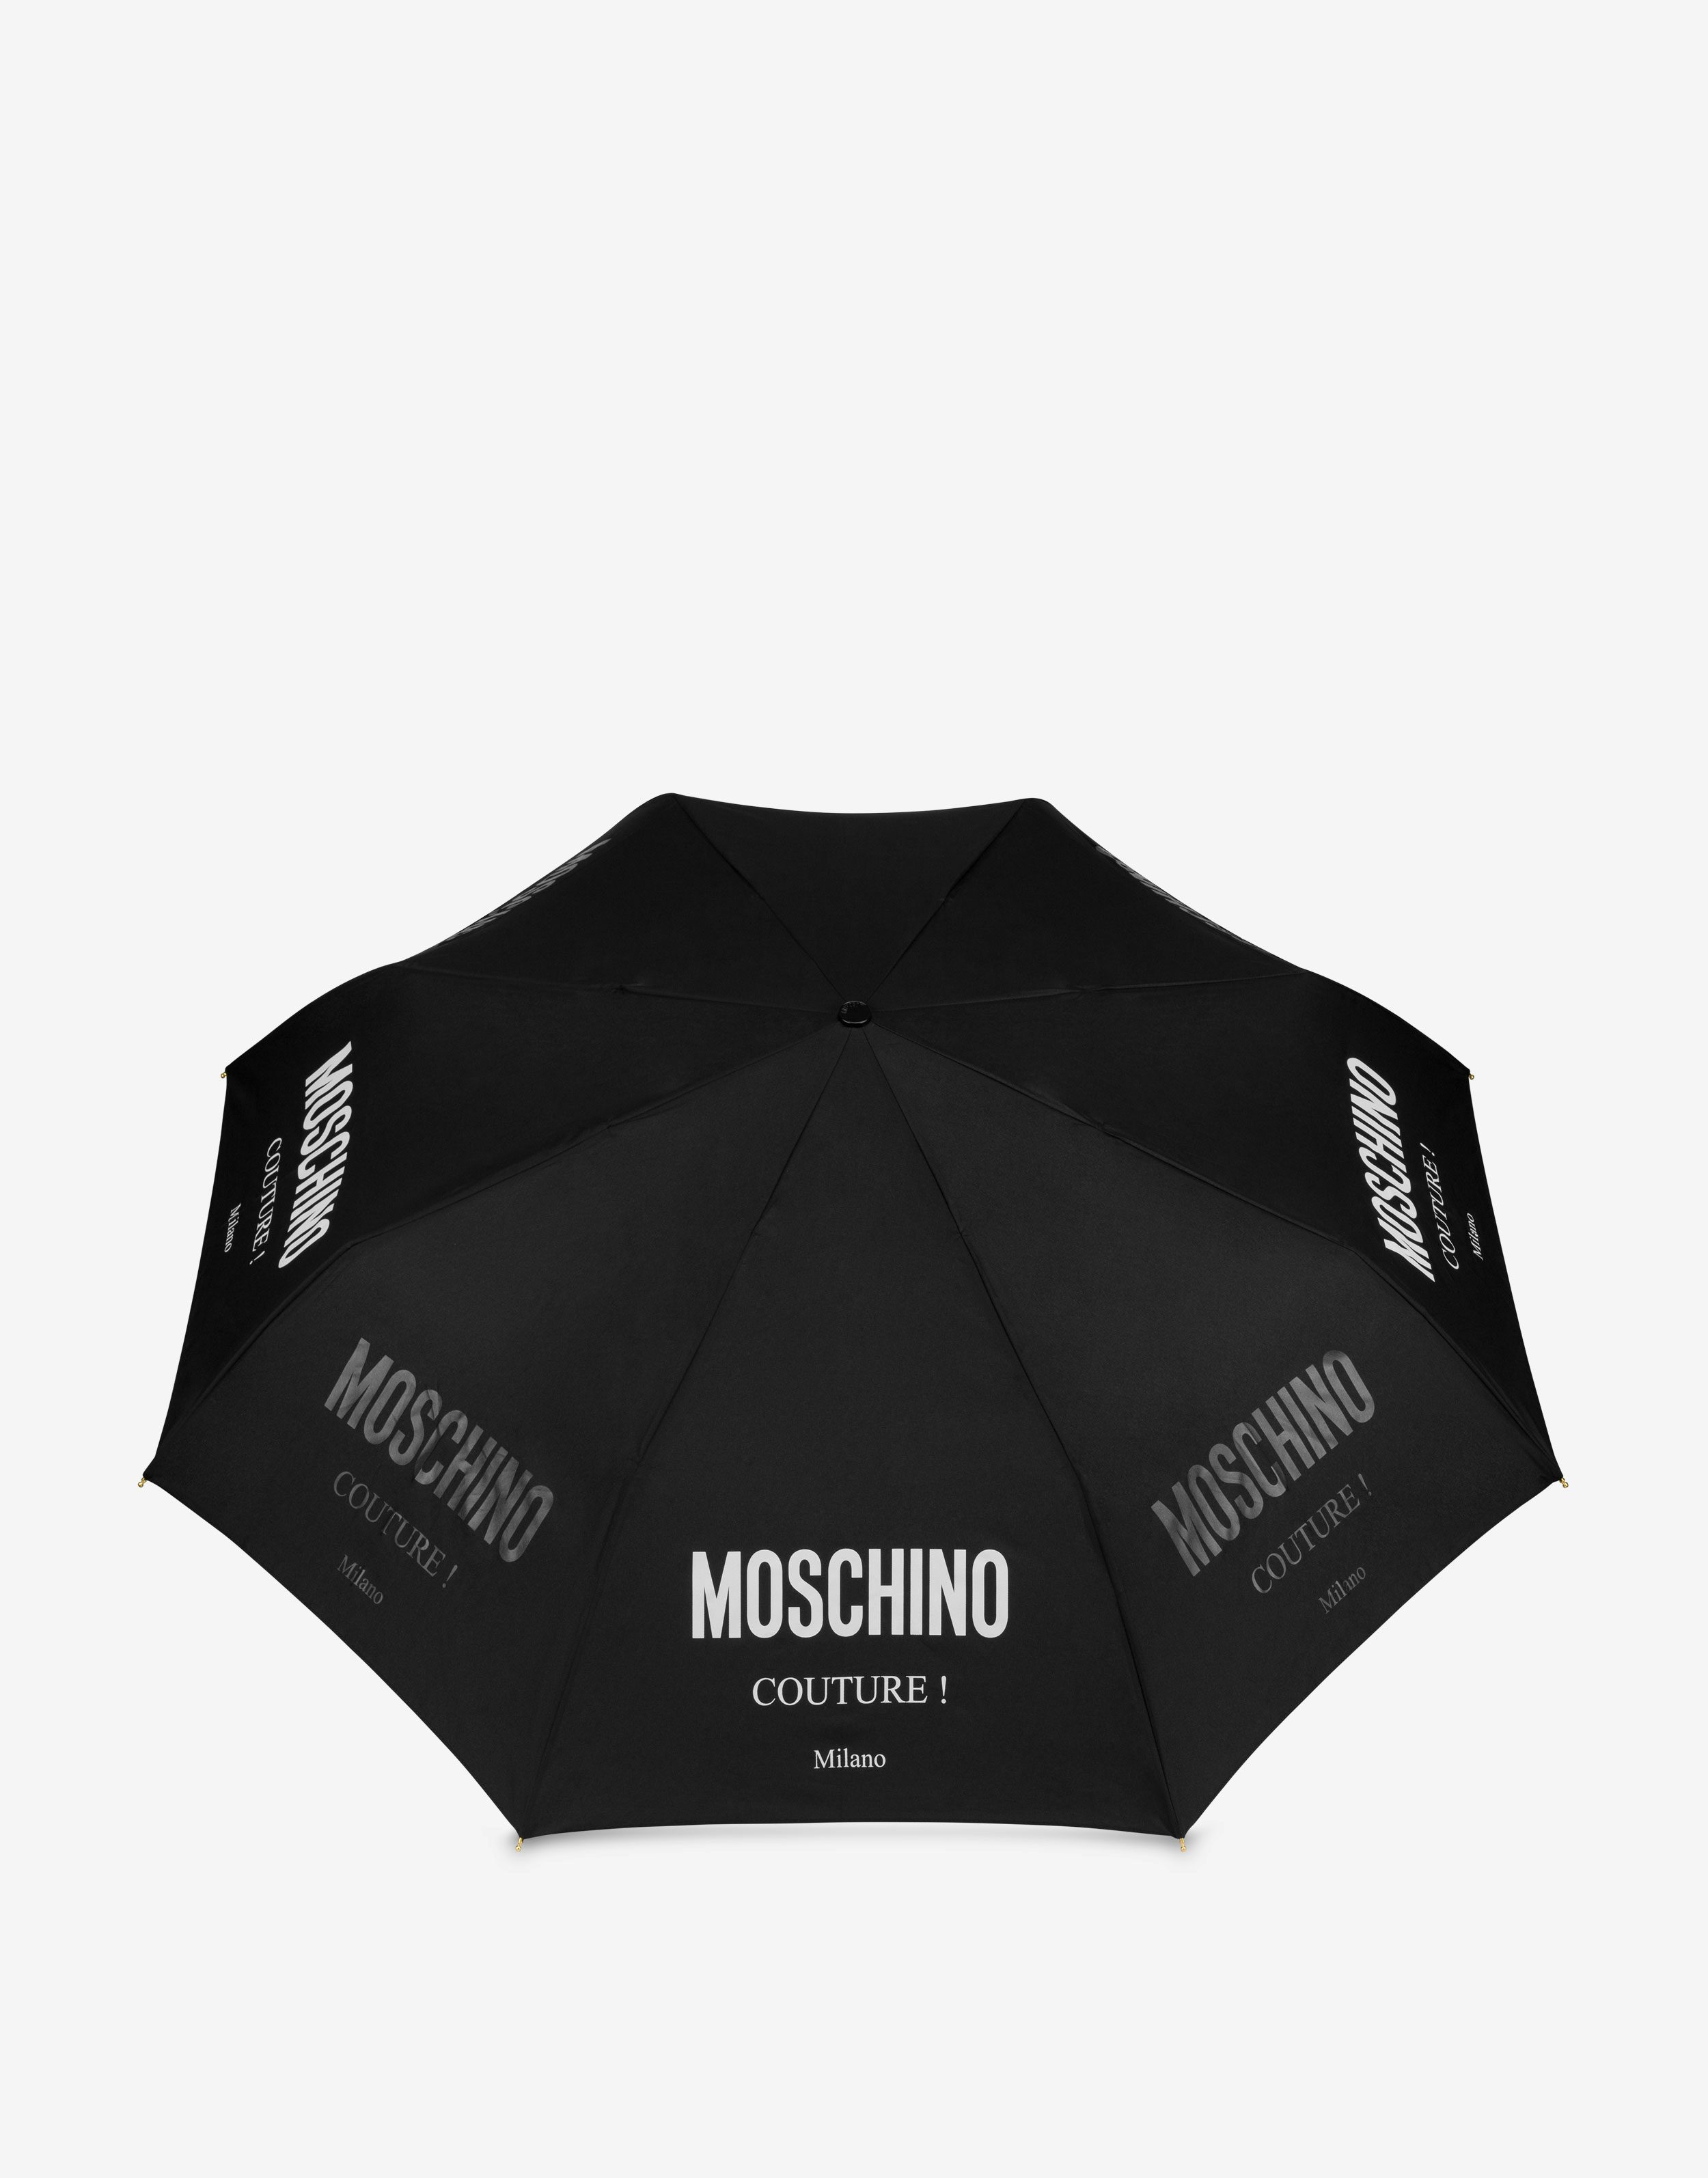 Moschino Couture open & close umbrella